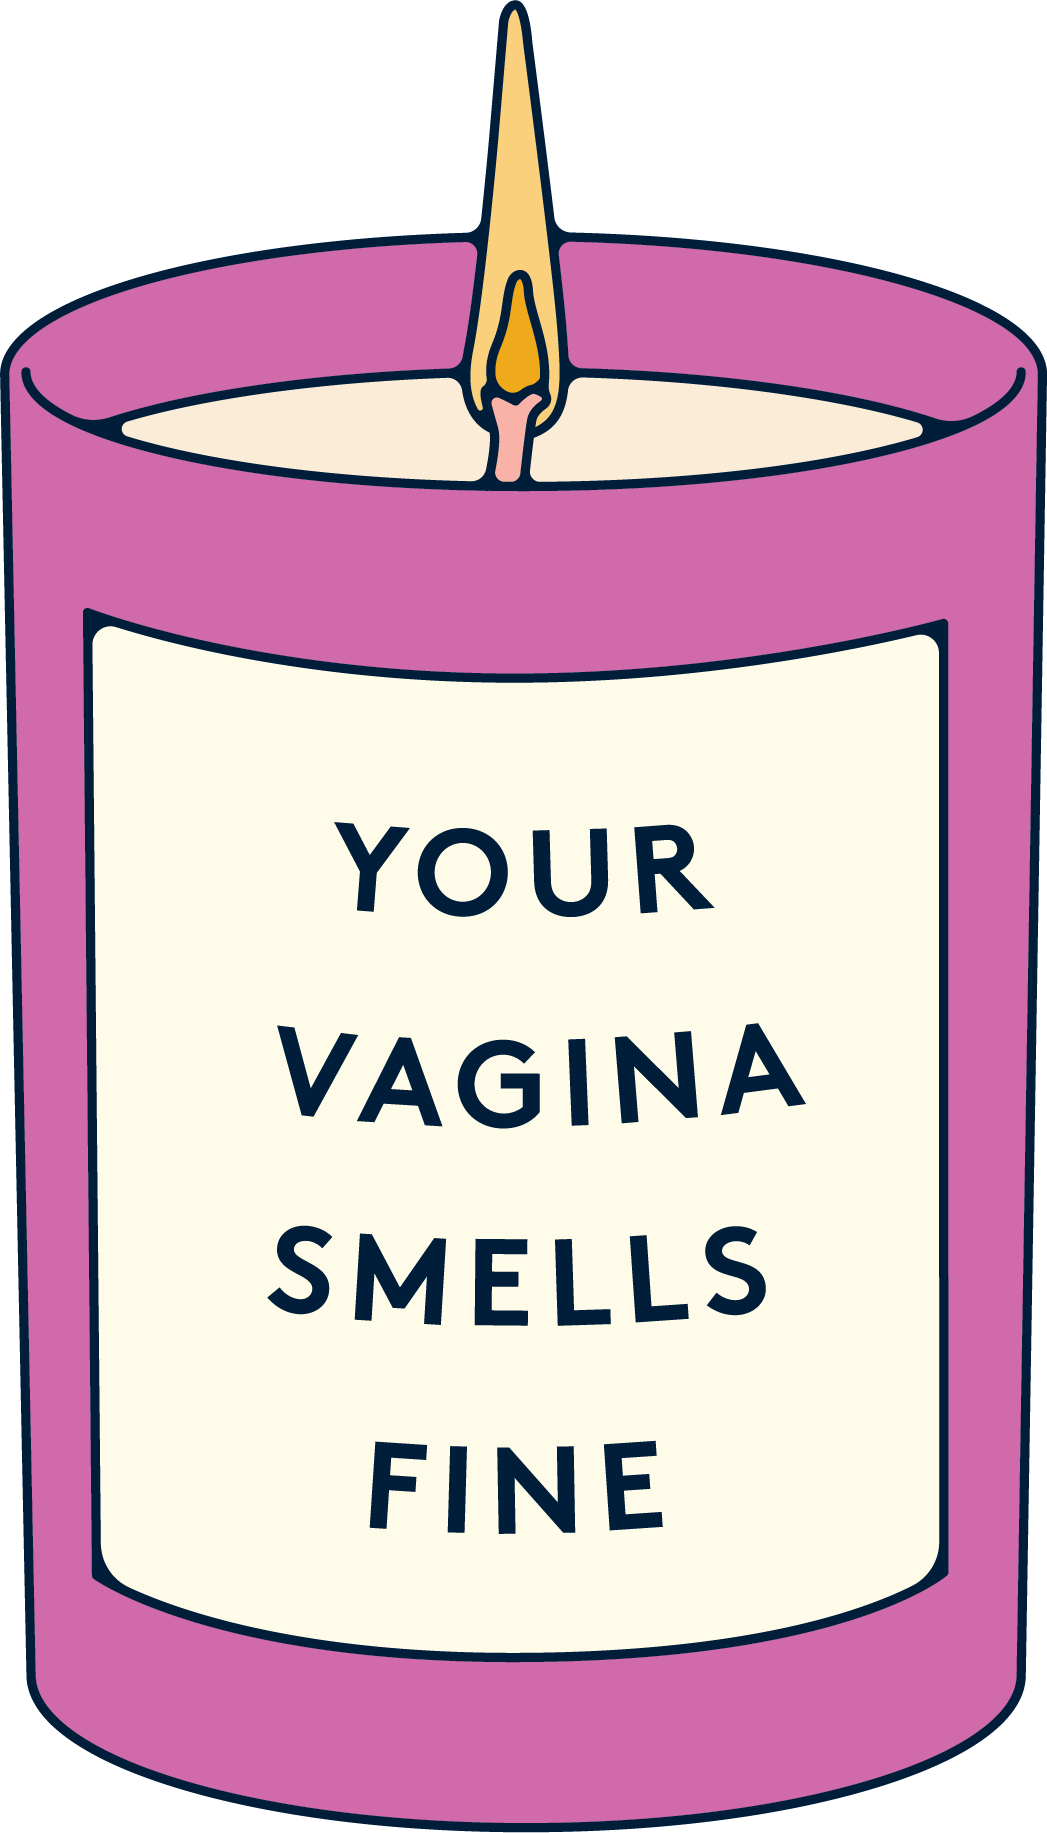 Why Does Vigina Smell